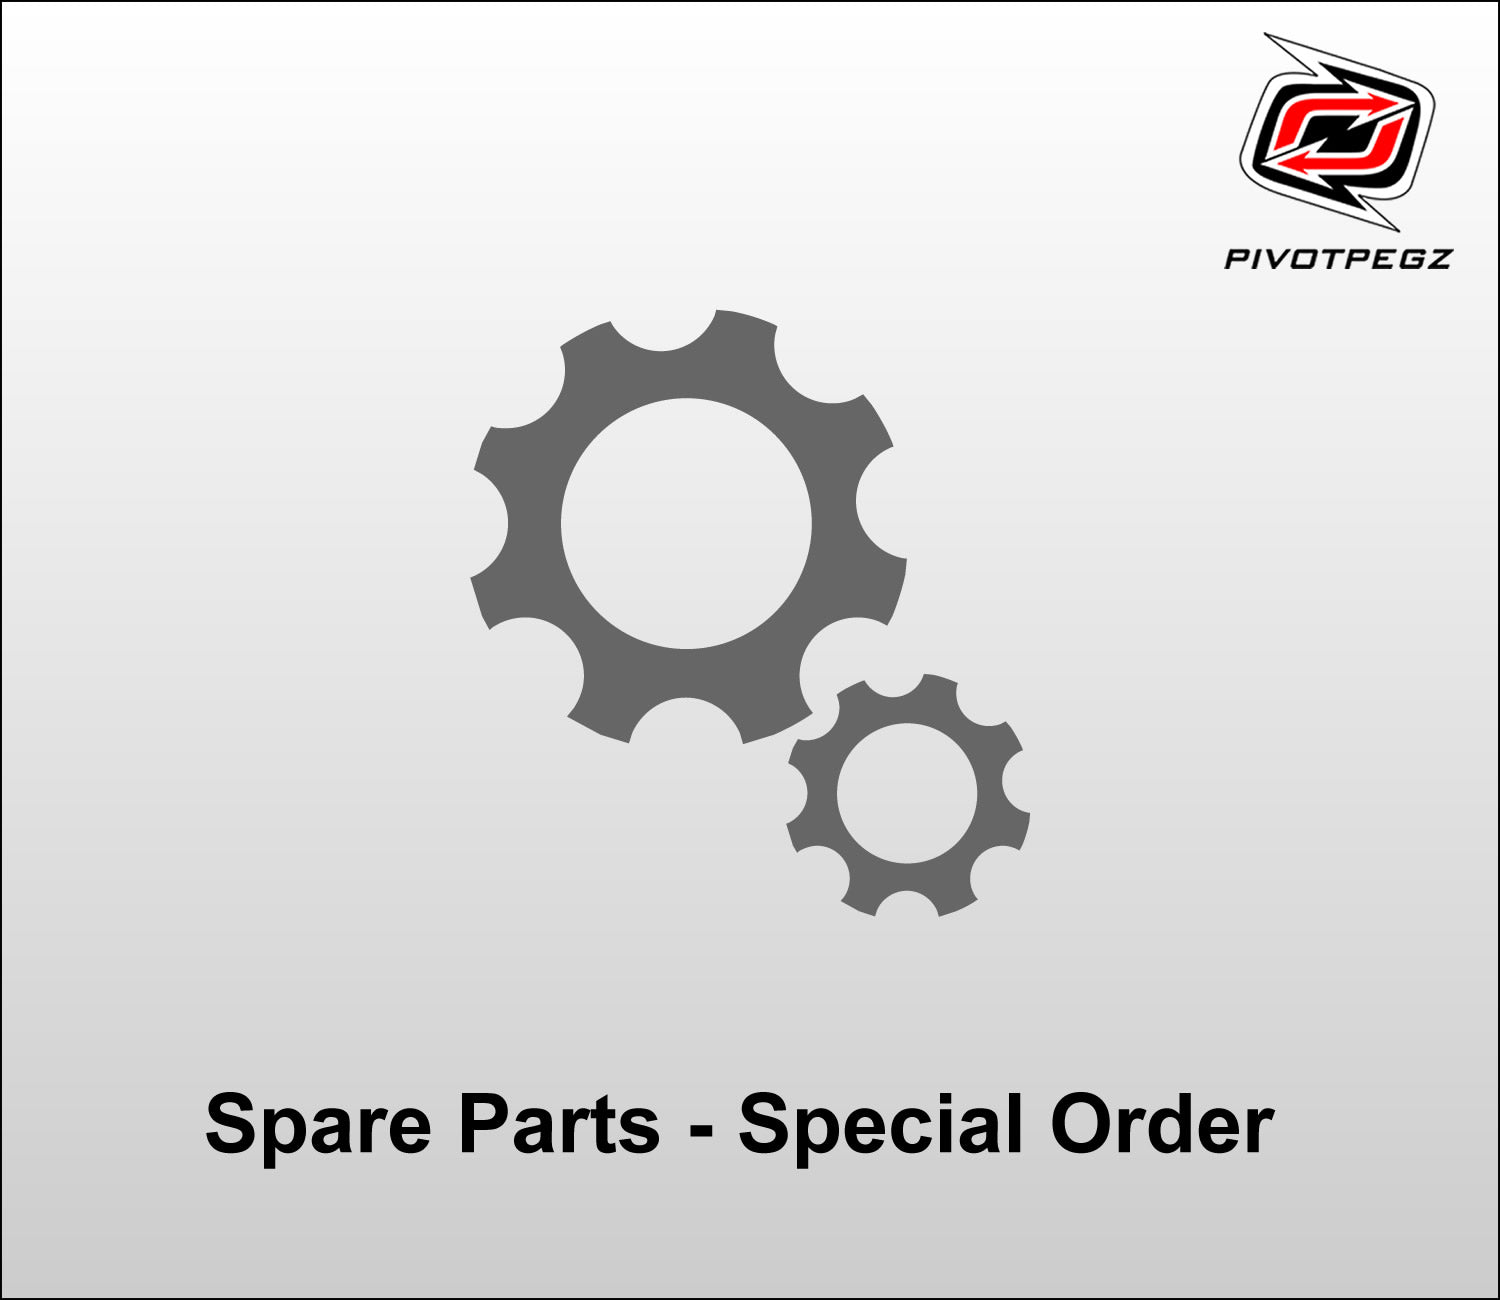 Spare Parts Special Order $25